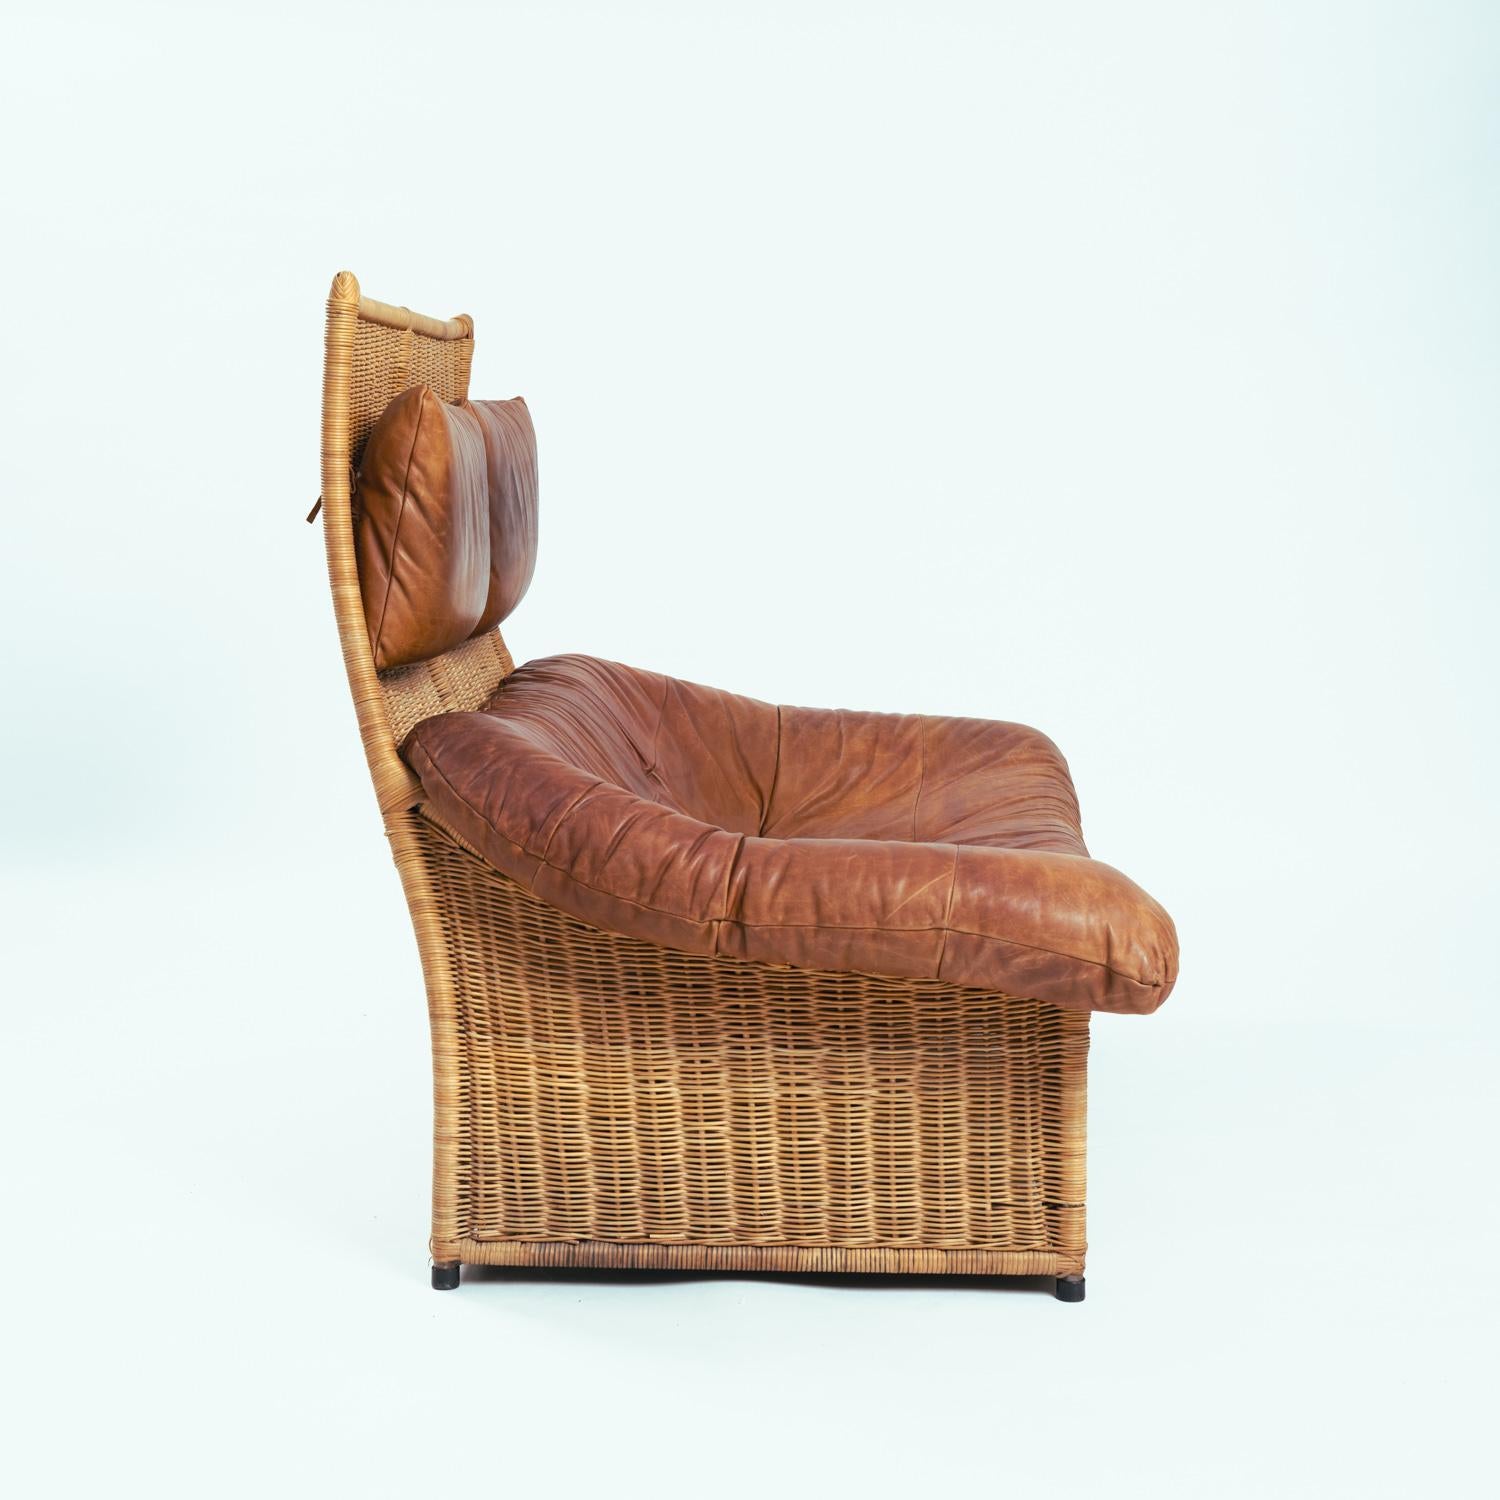 Caning Dutch The Rock Gerard van den Berg midcentury modern rattan leather 2 seat sofa For Sale